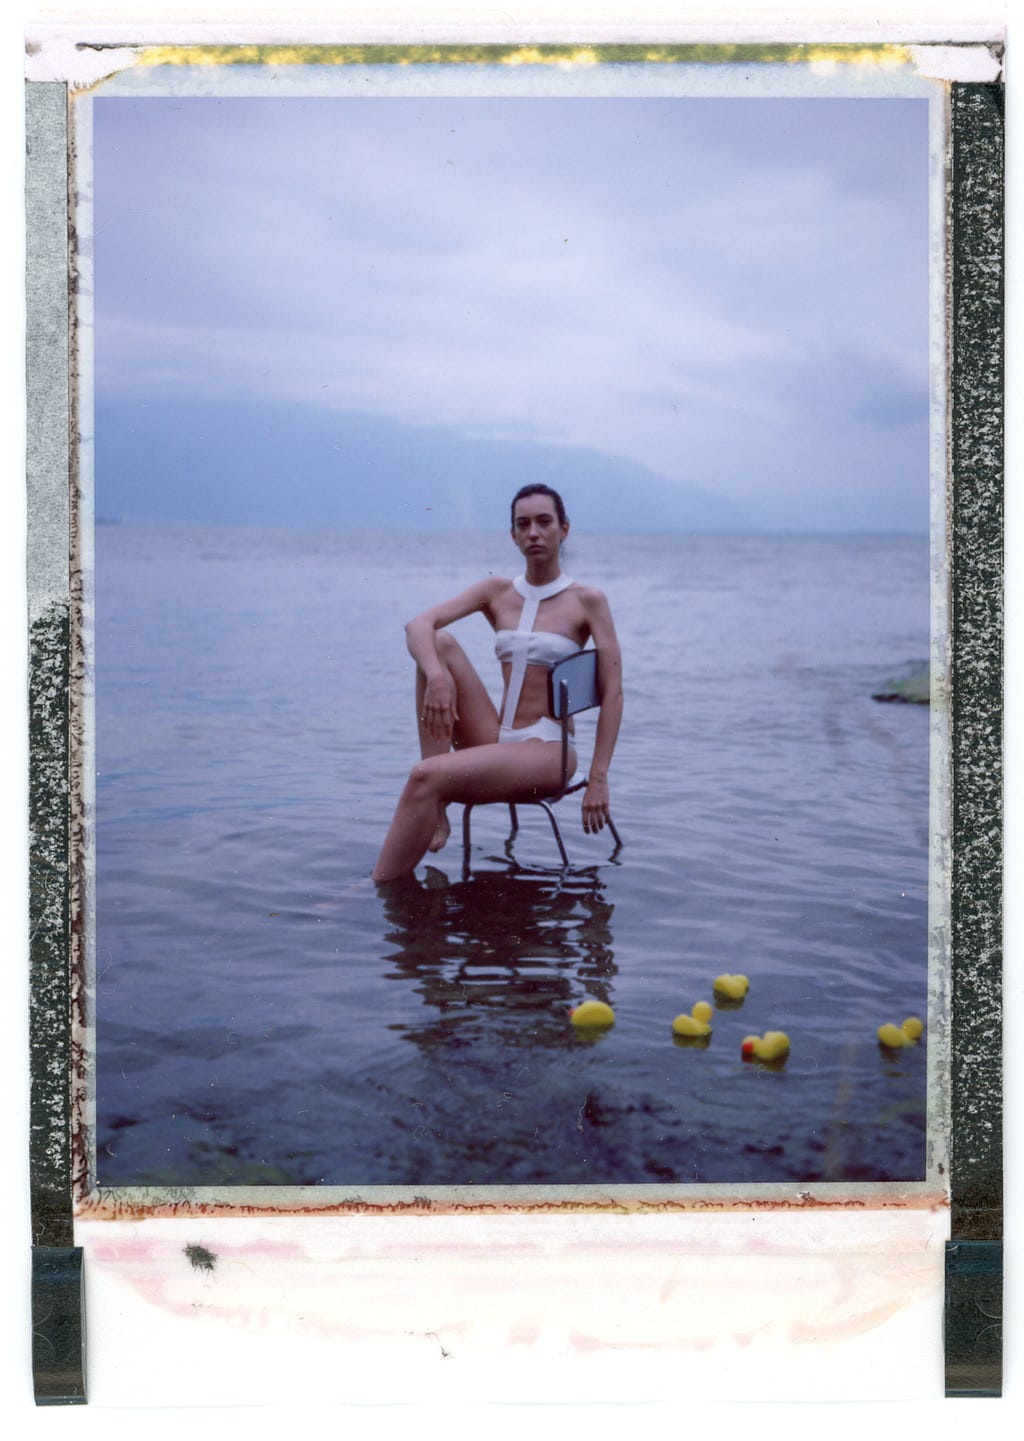 Swimsuit model in the Lake of Geneva and fleeing ducklings.